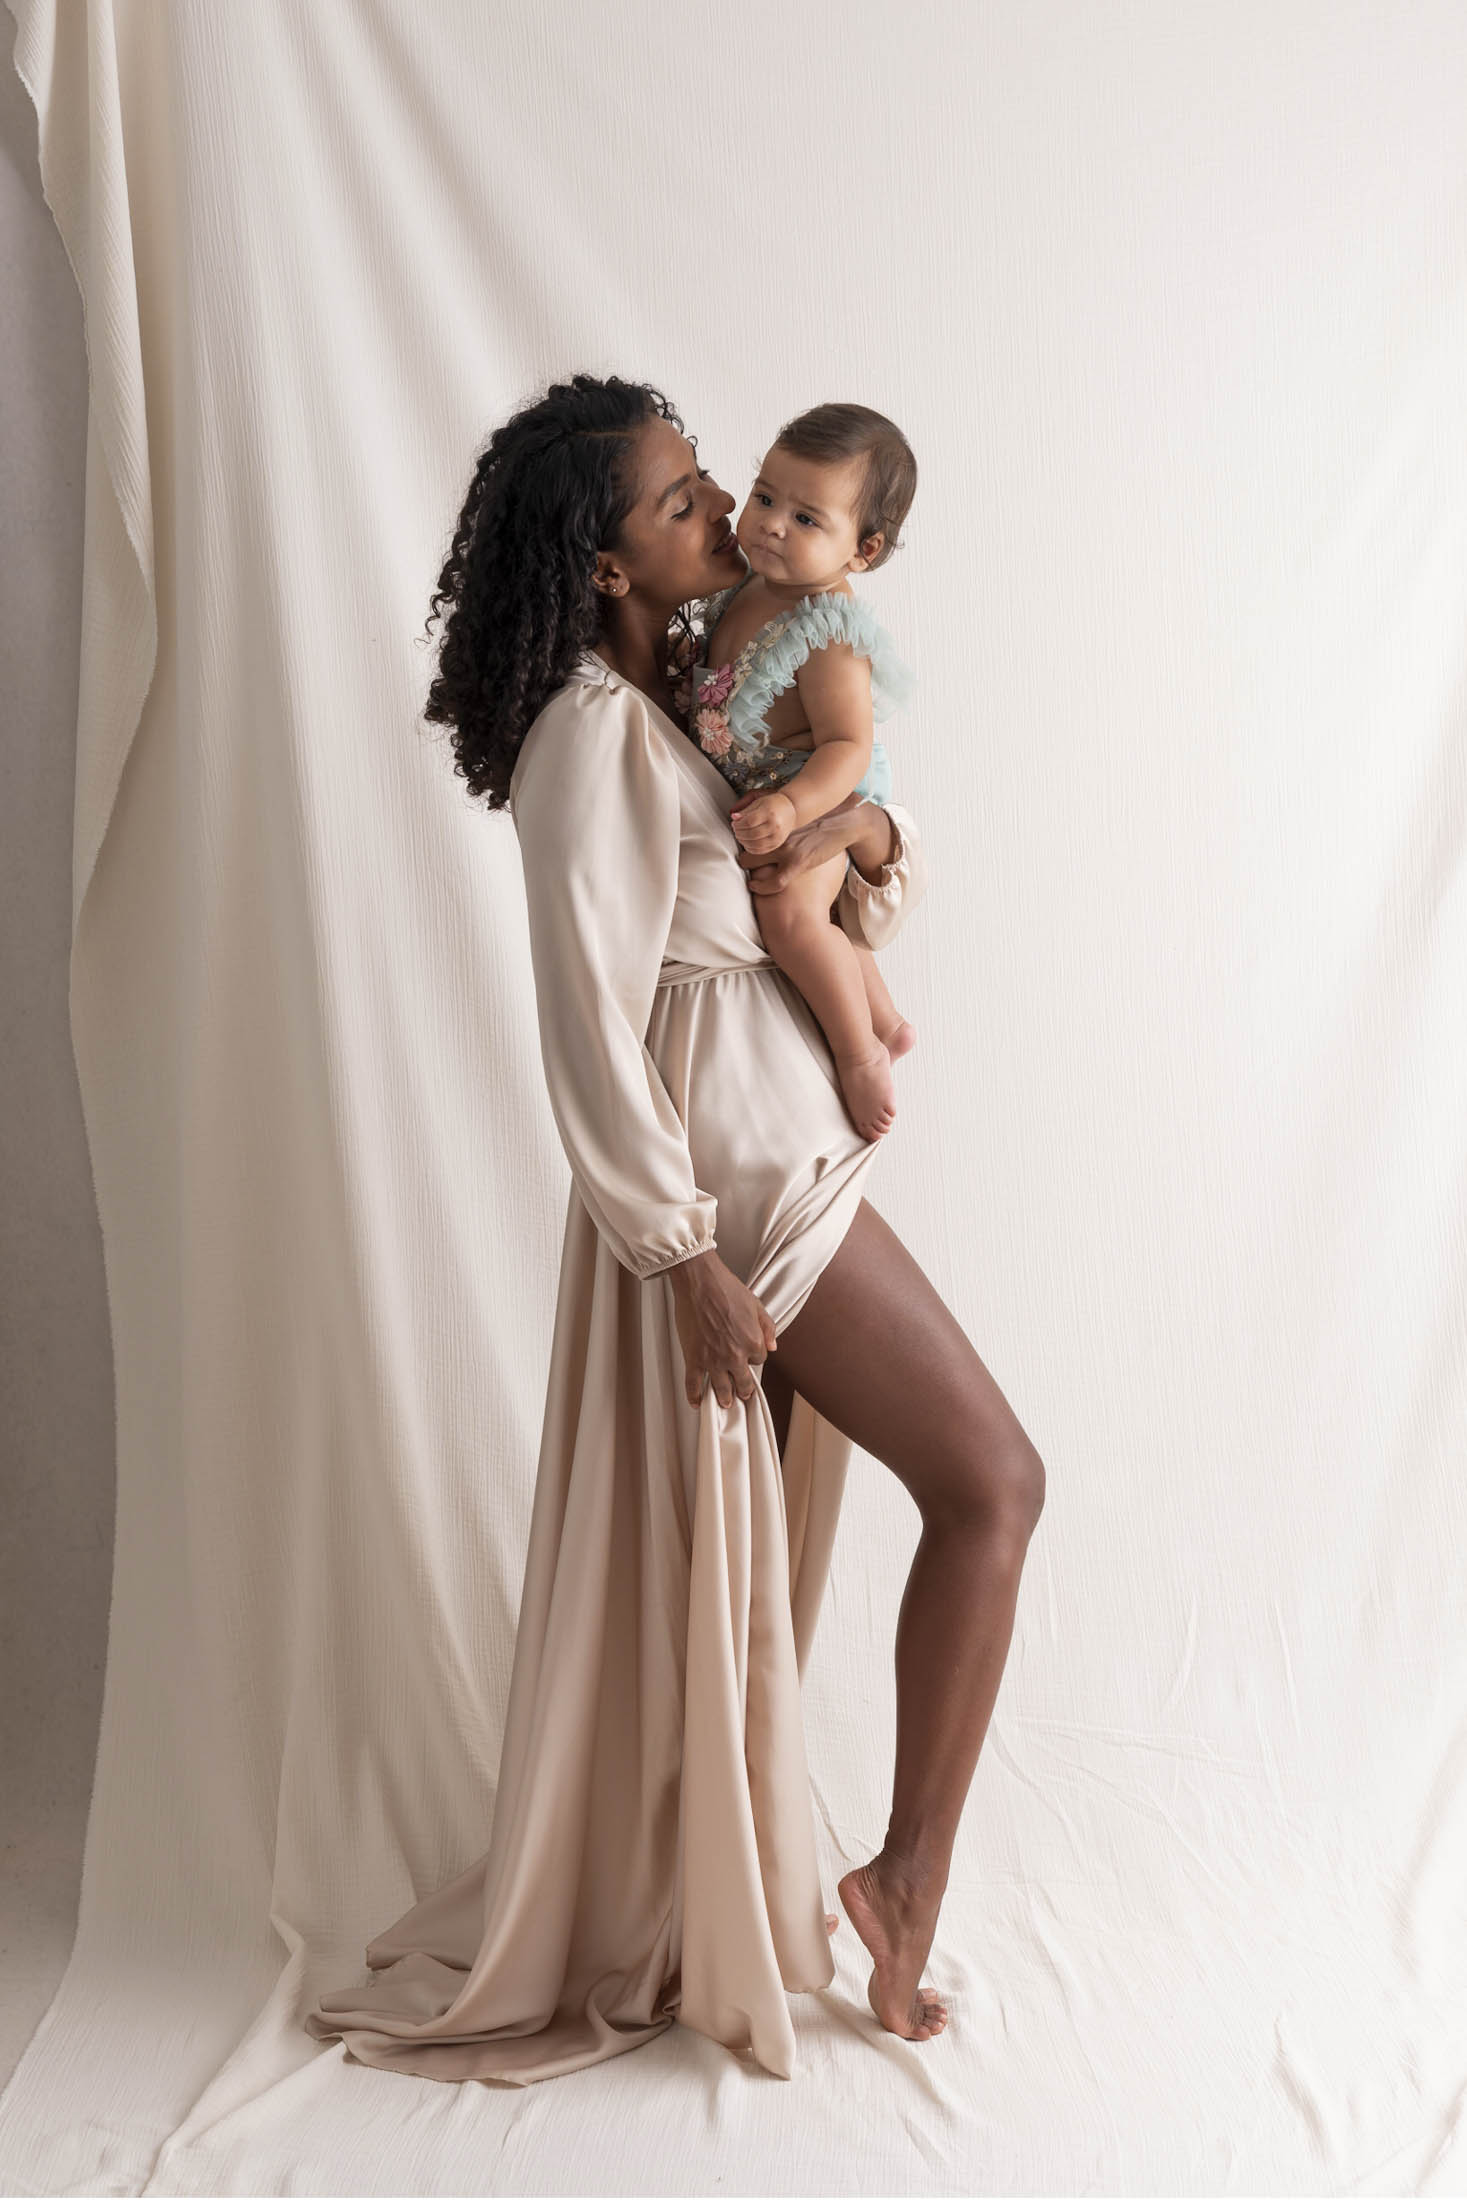 photographe allauch famille grossesse marseille